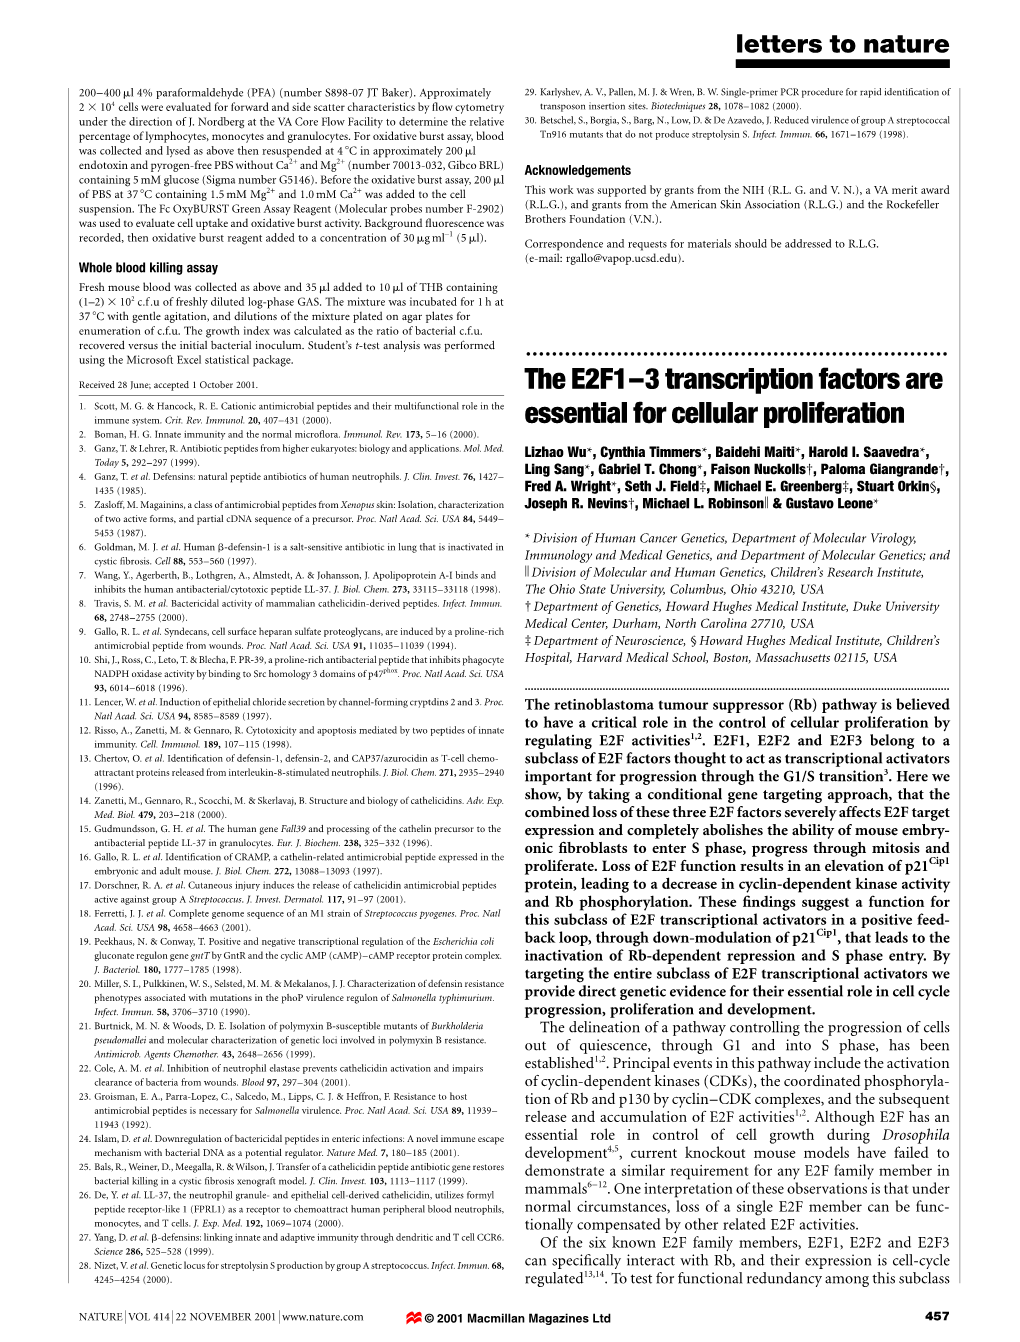 The E2F1±3 Transcription Factors Are Essential for Cellular Proliferation